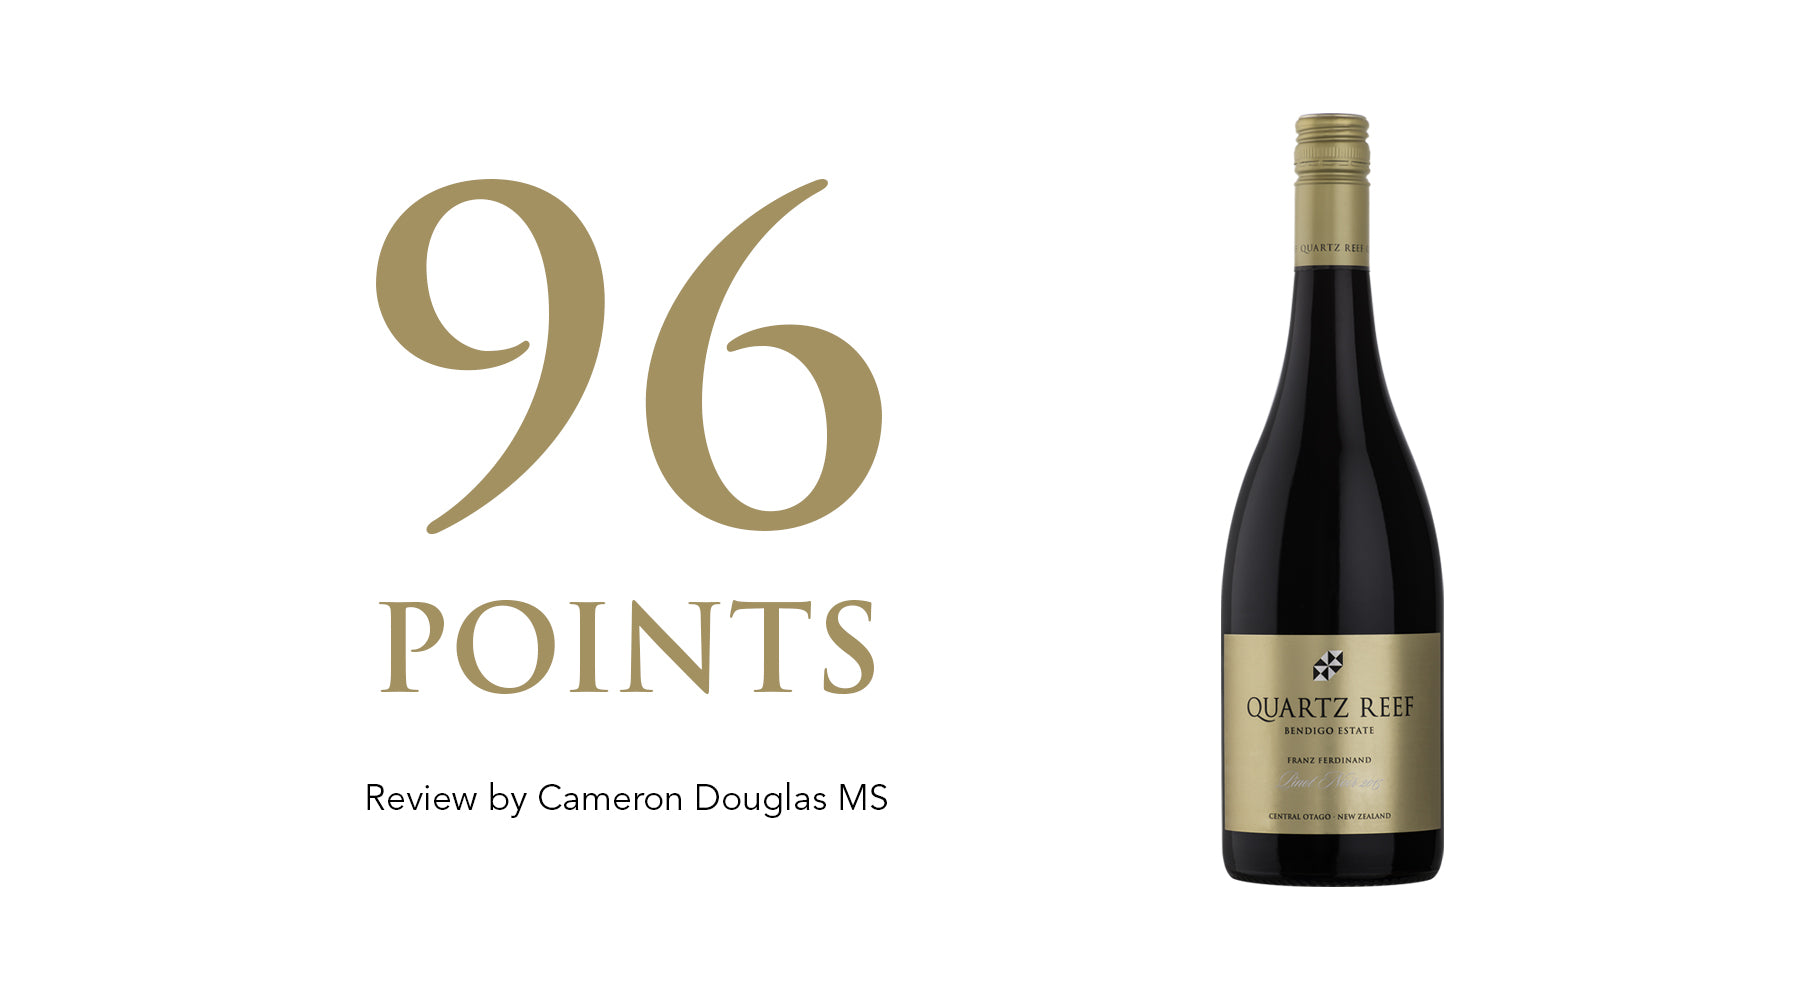 Royal Series "Franz Ferdinand" Pinot Noir 2015 - Awarded 96 Points